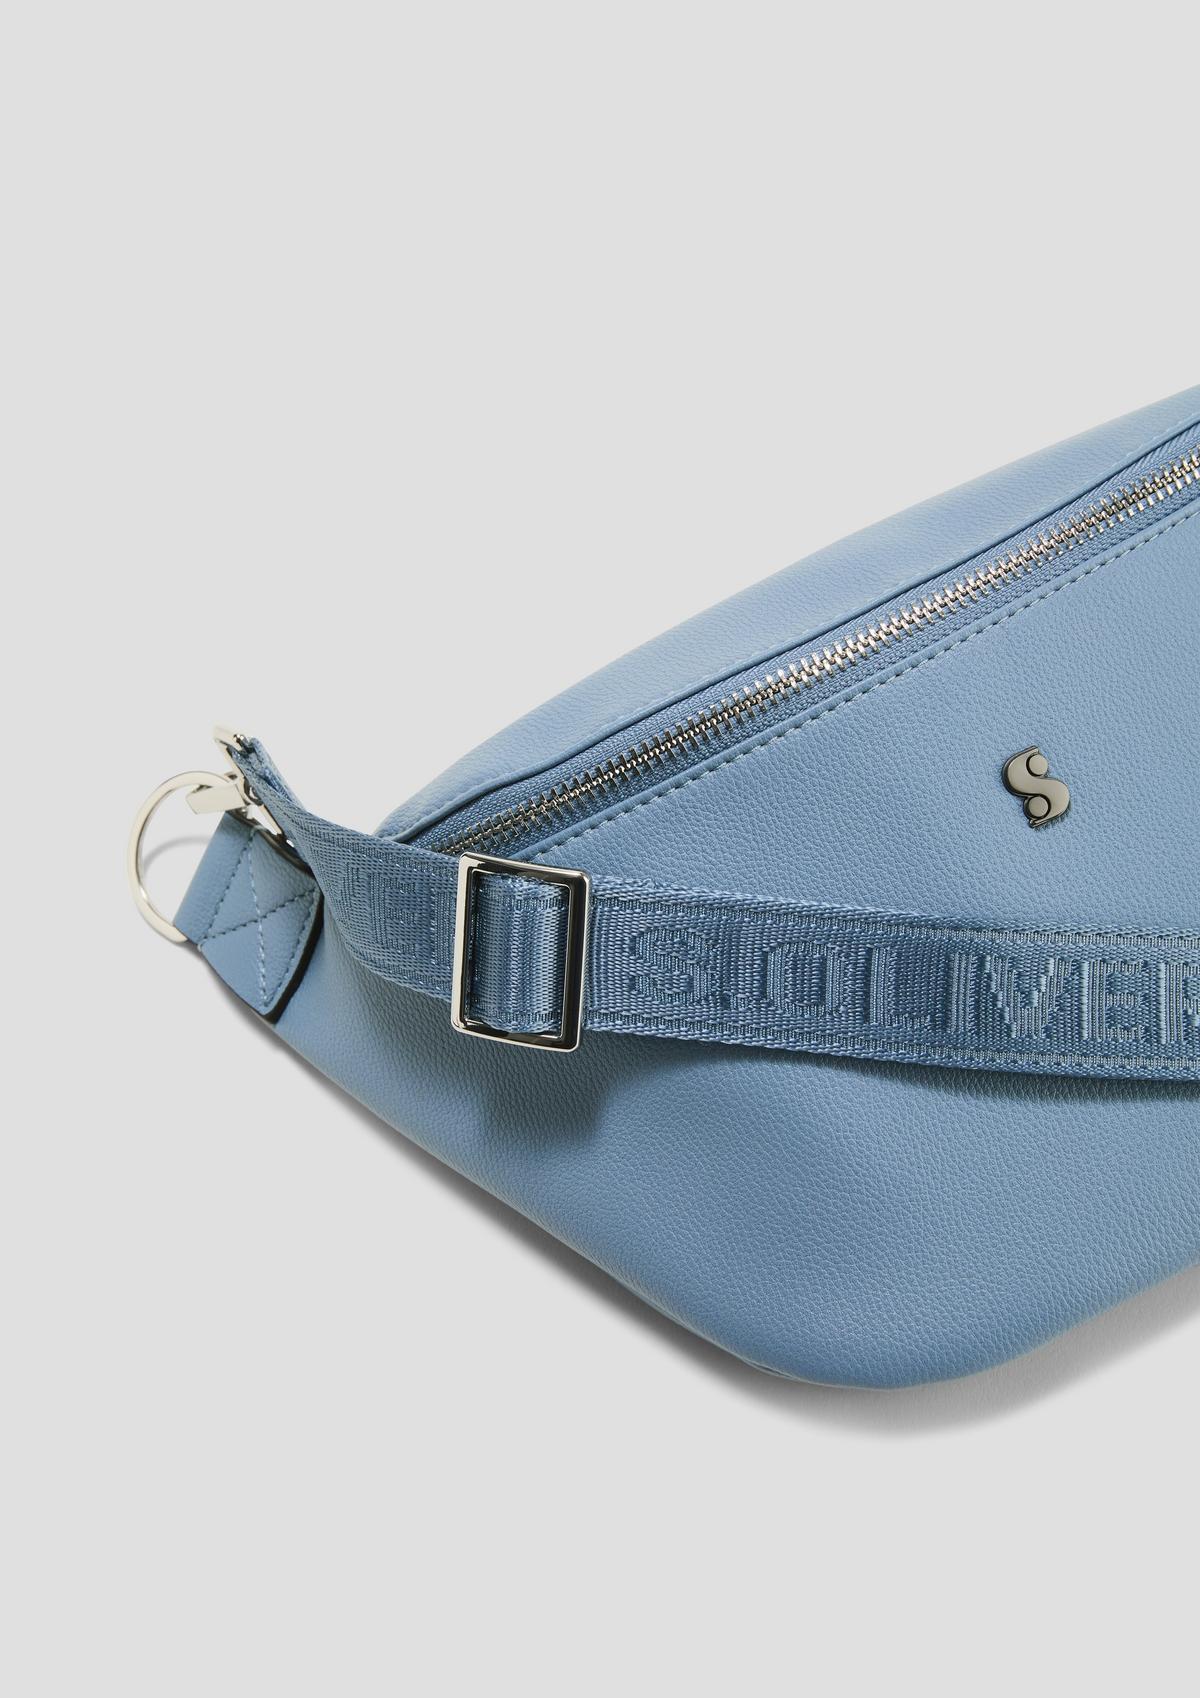 s.Oliver Cross-body bag with a detachable shoulder strap